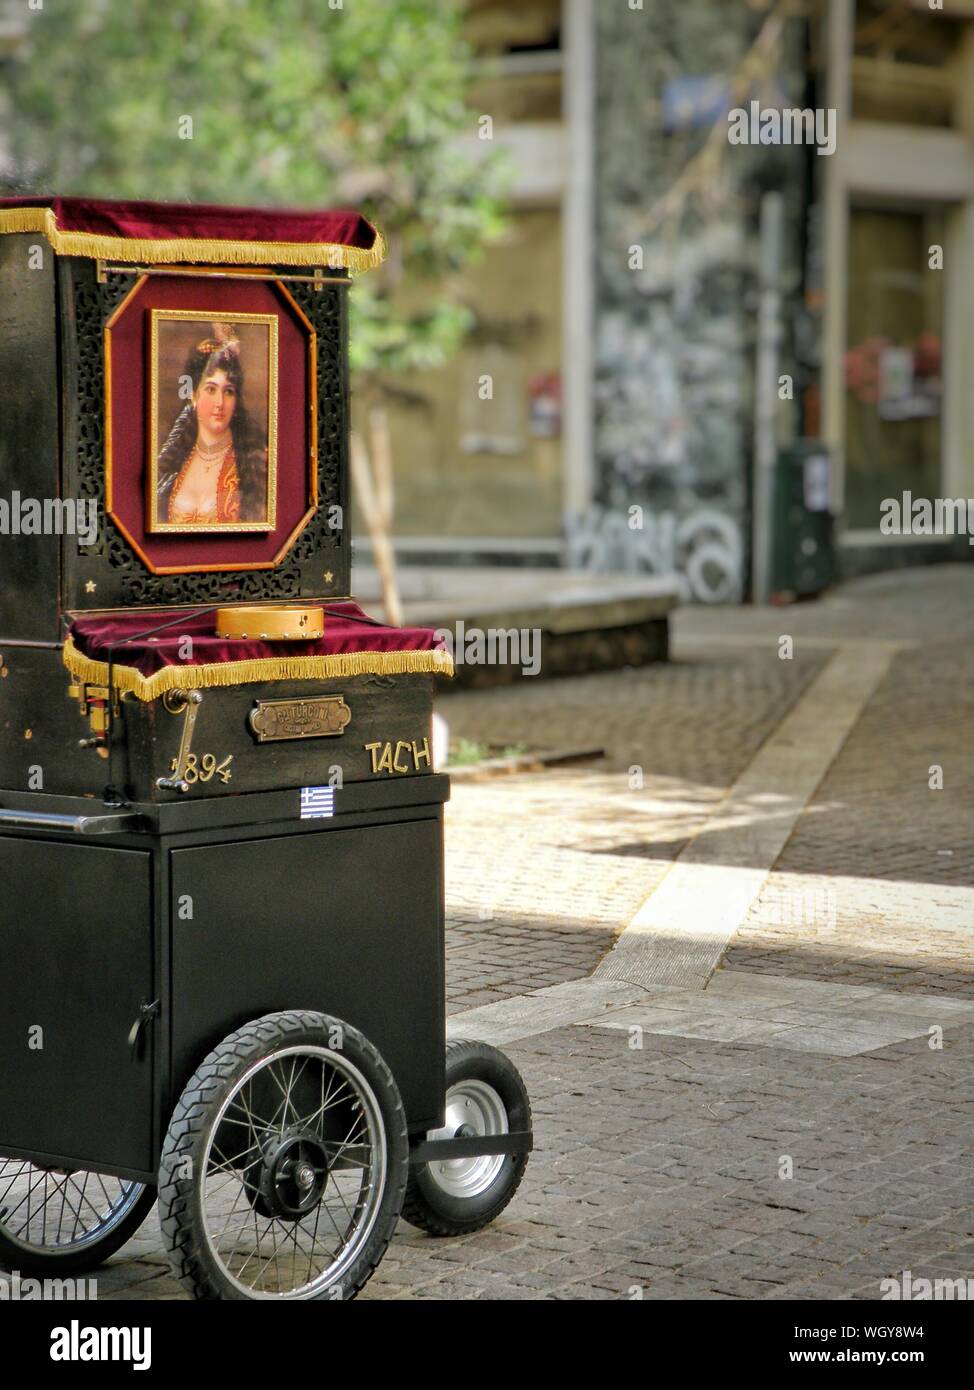 Barrel Organ On Street Stock Photo